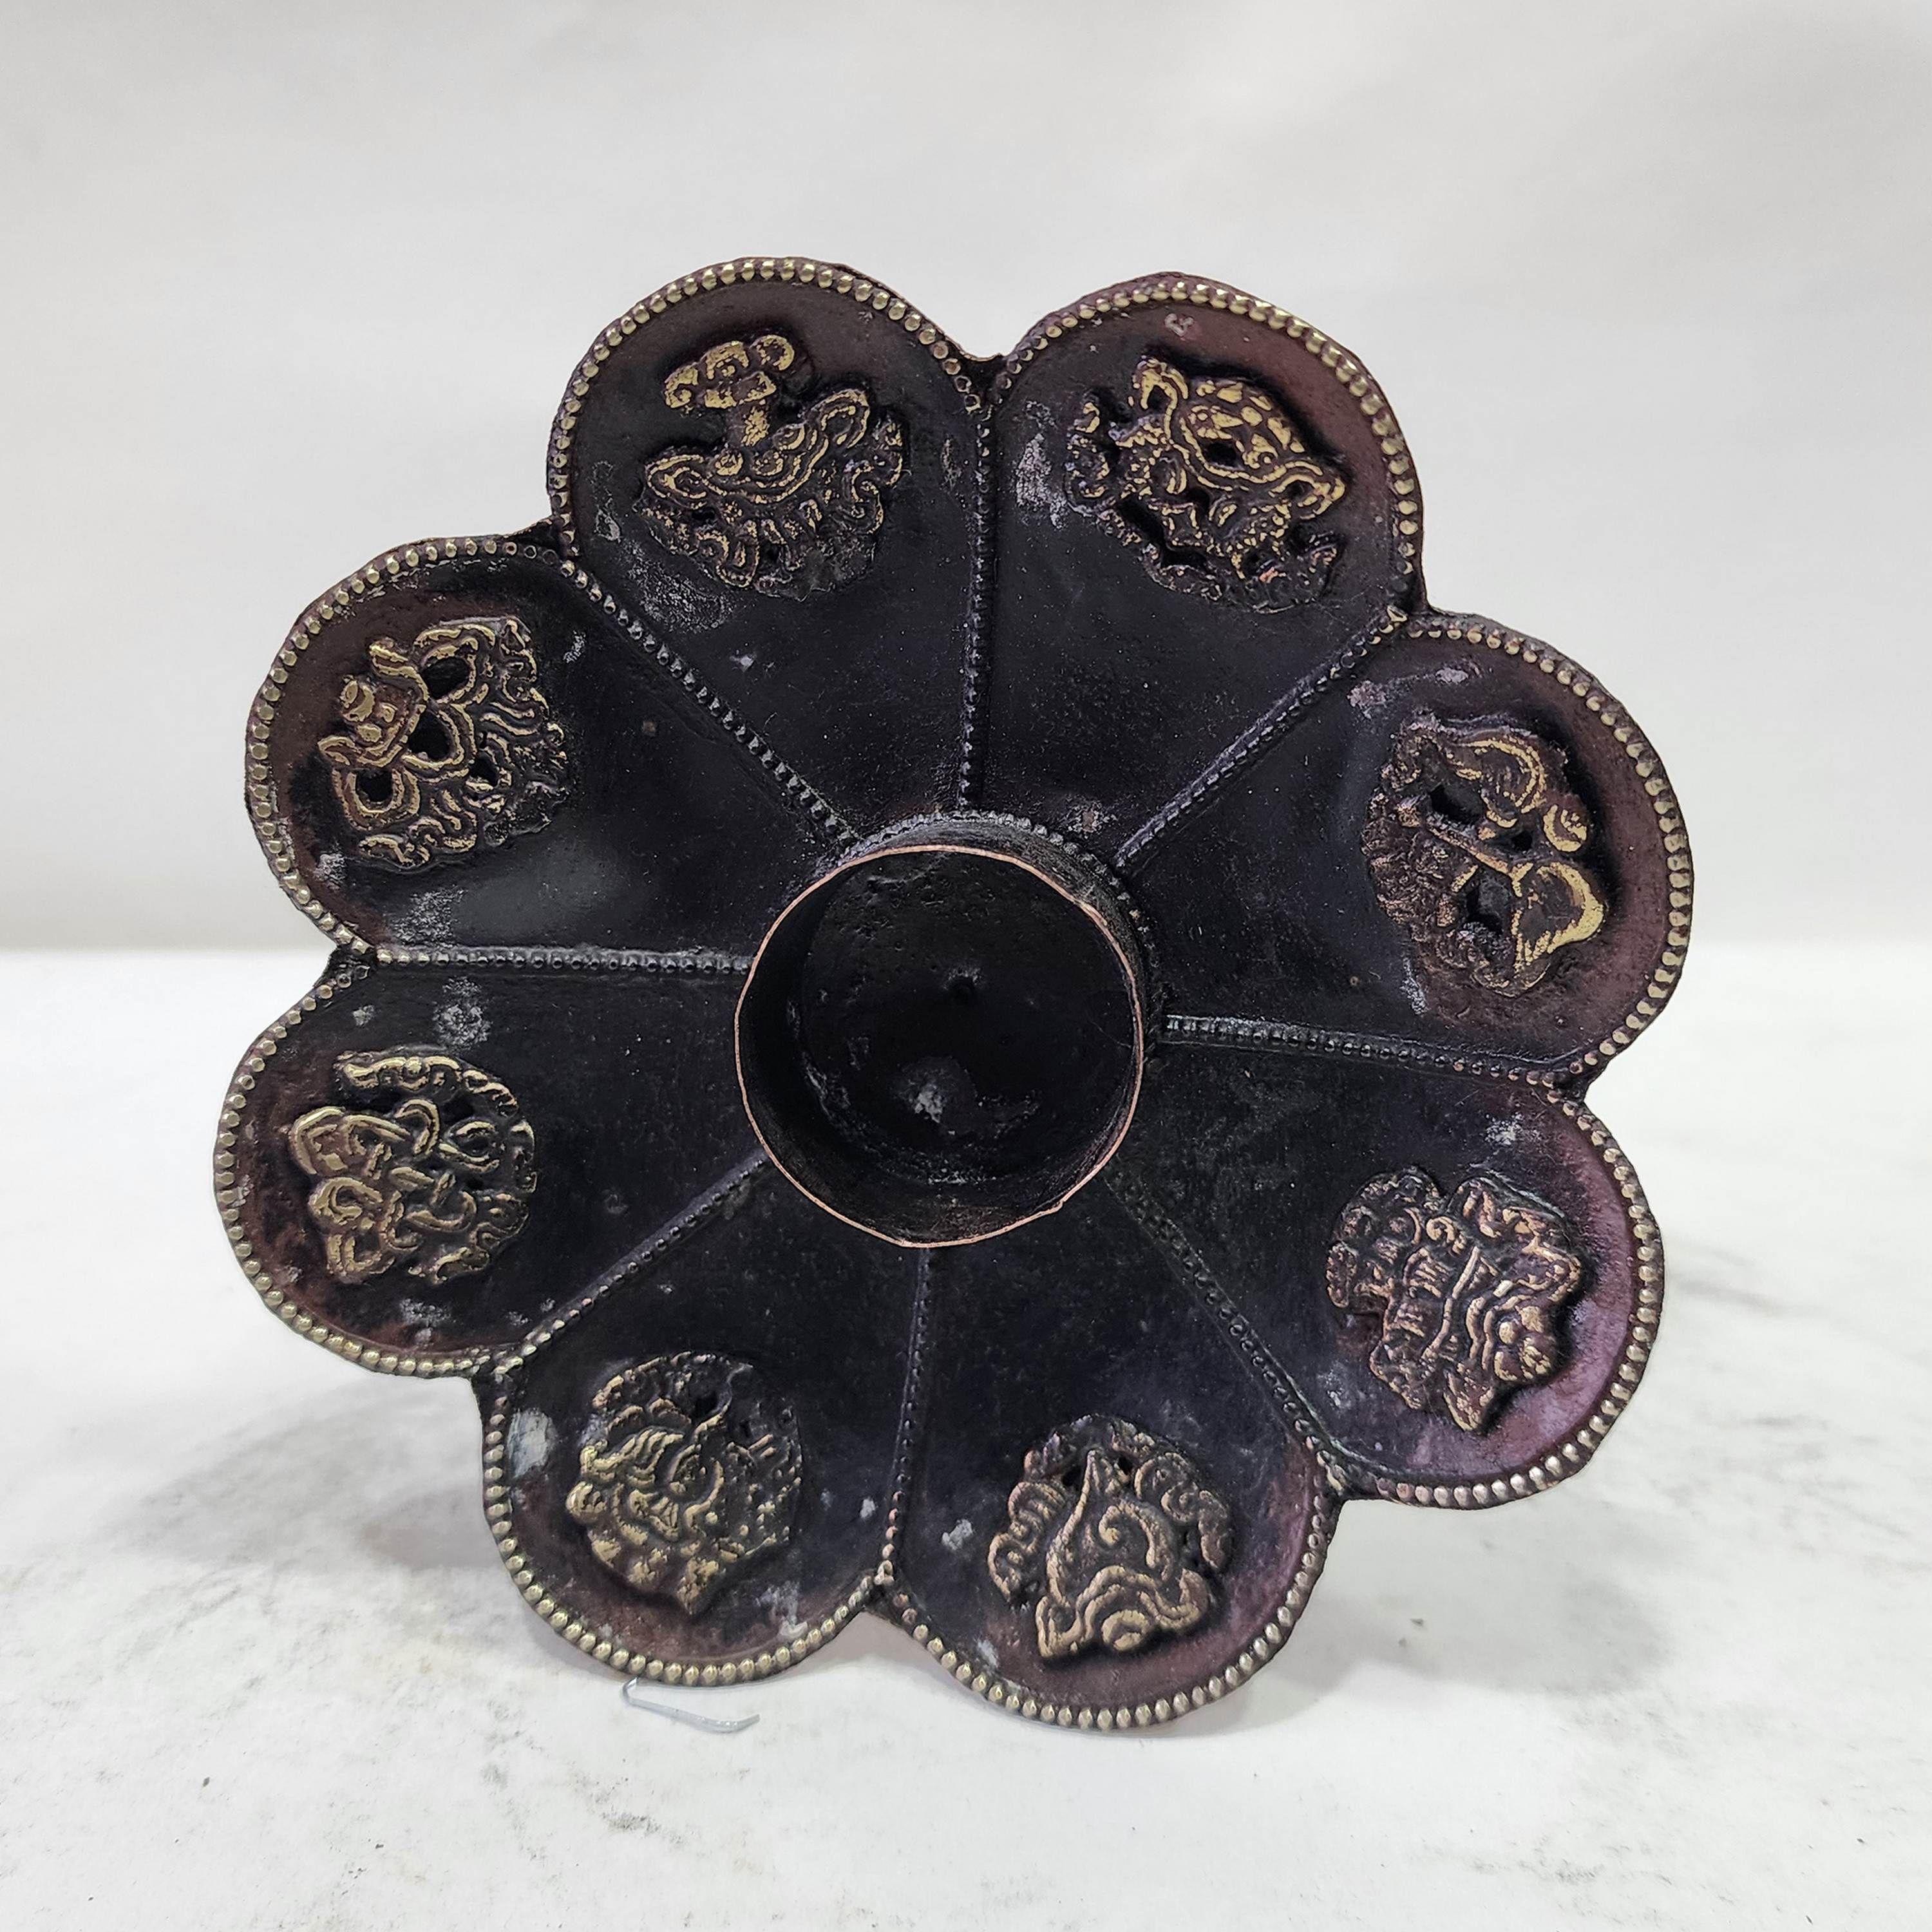 Hand Beaten Metal Incense Burner Lotus Flower Design Stand, Chocolate Oxidized